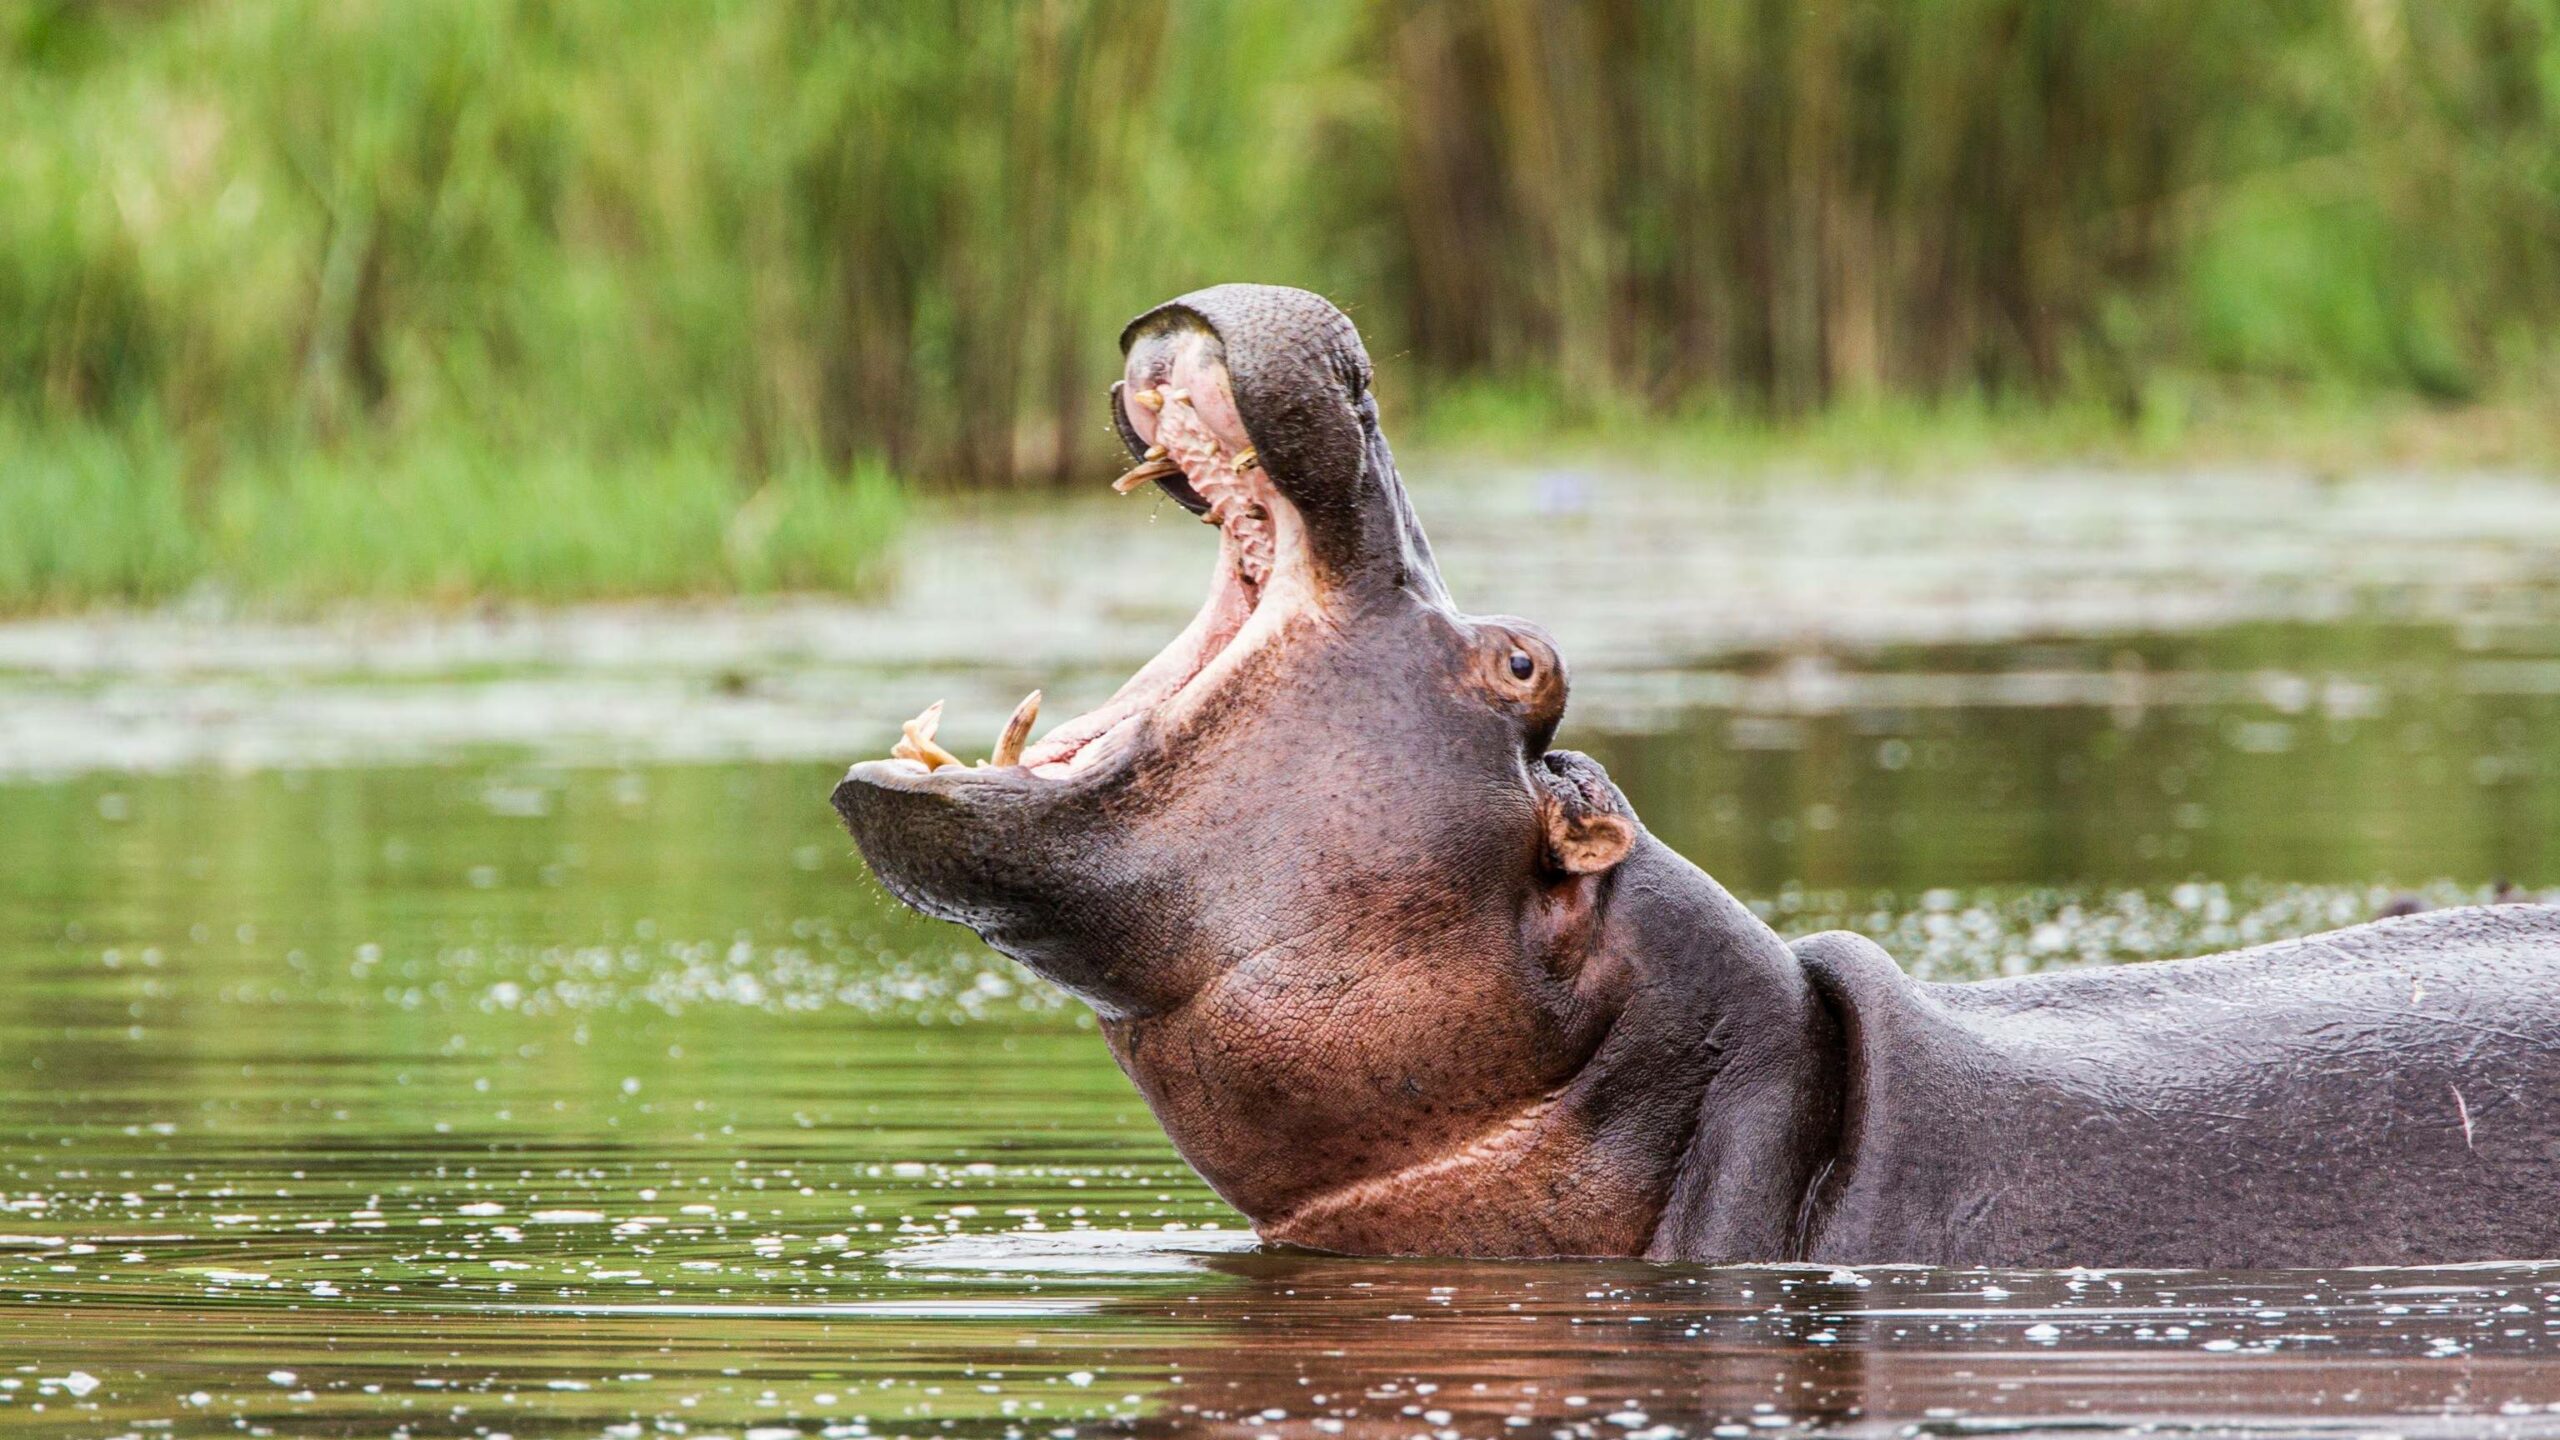 Hippopotame